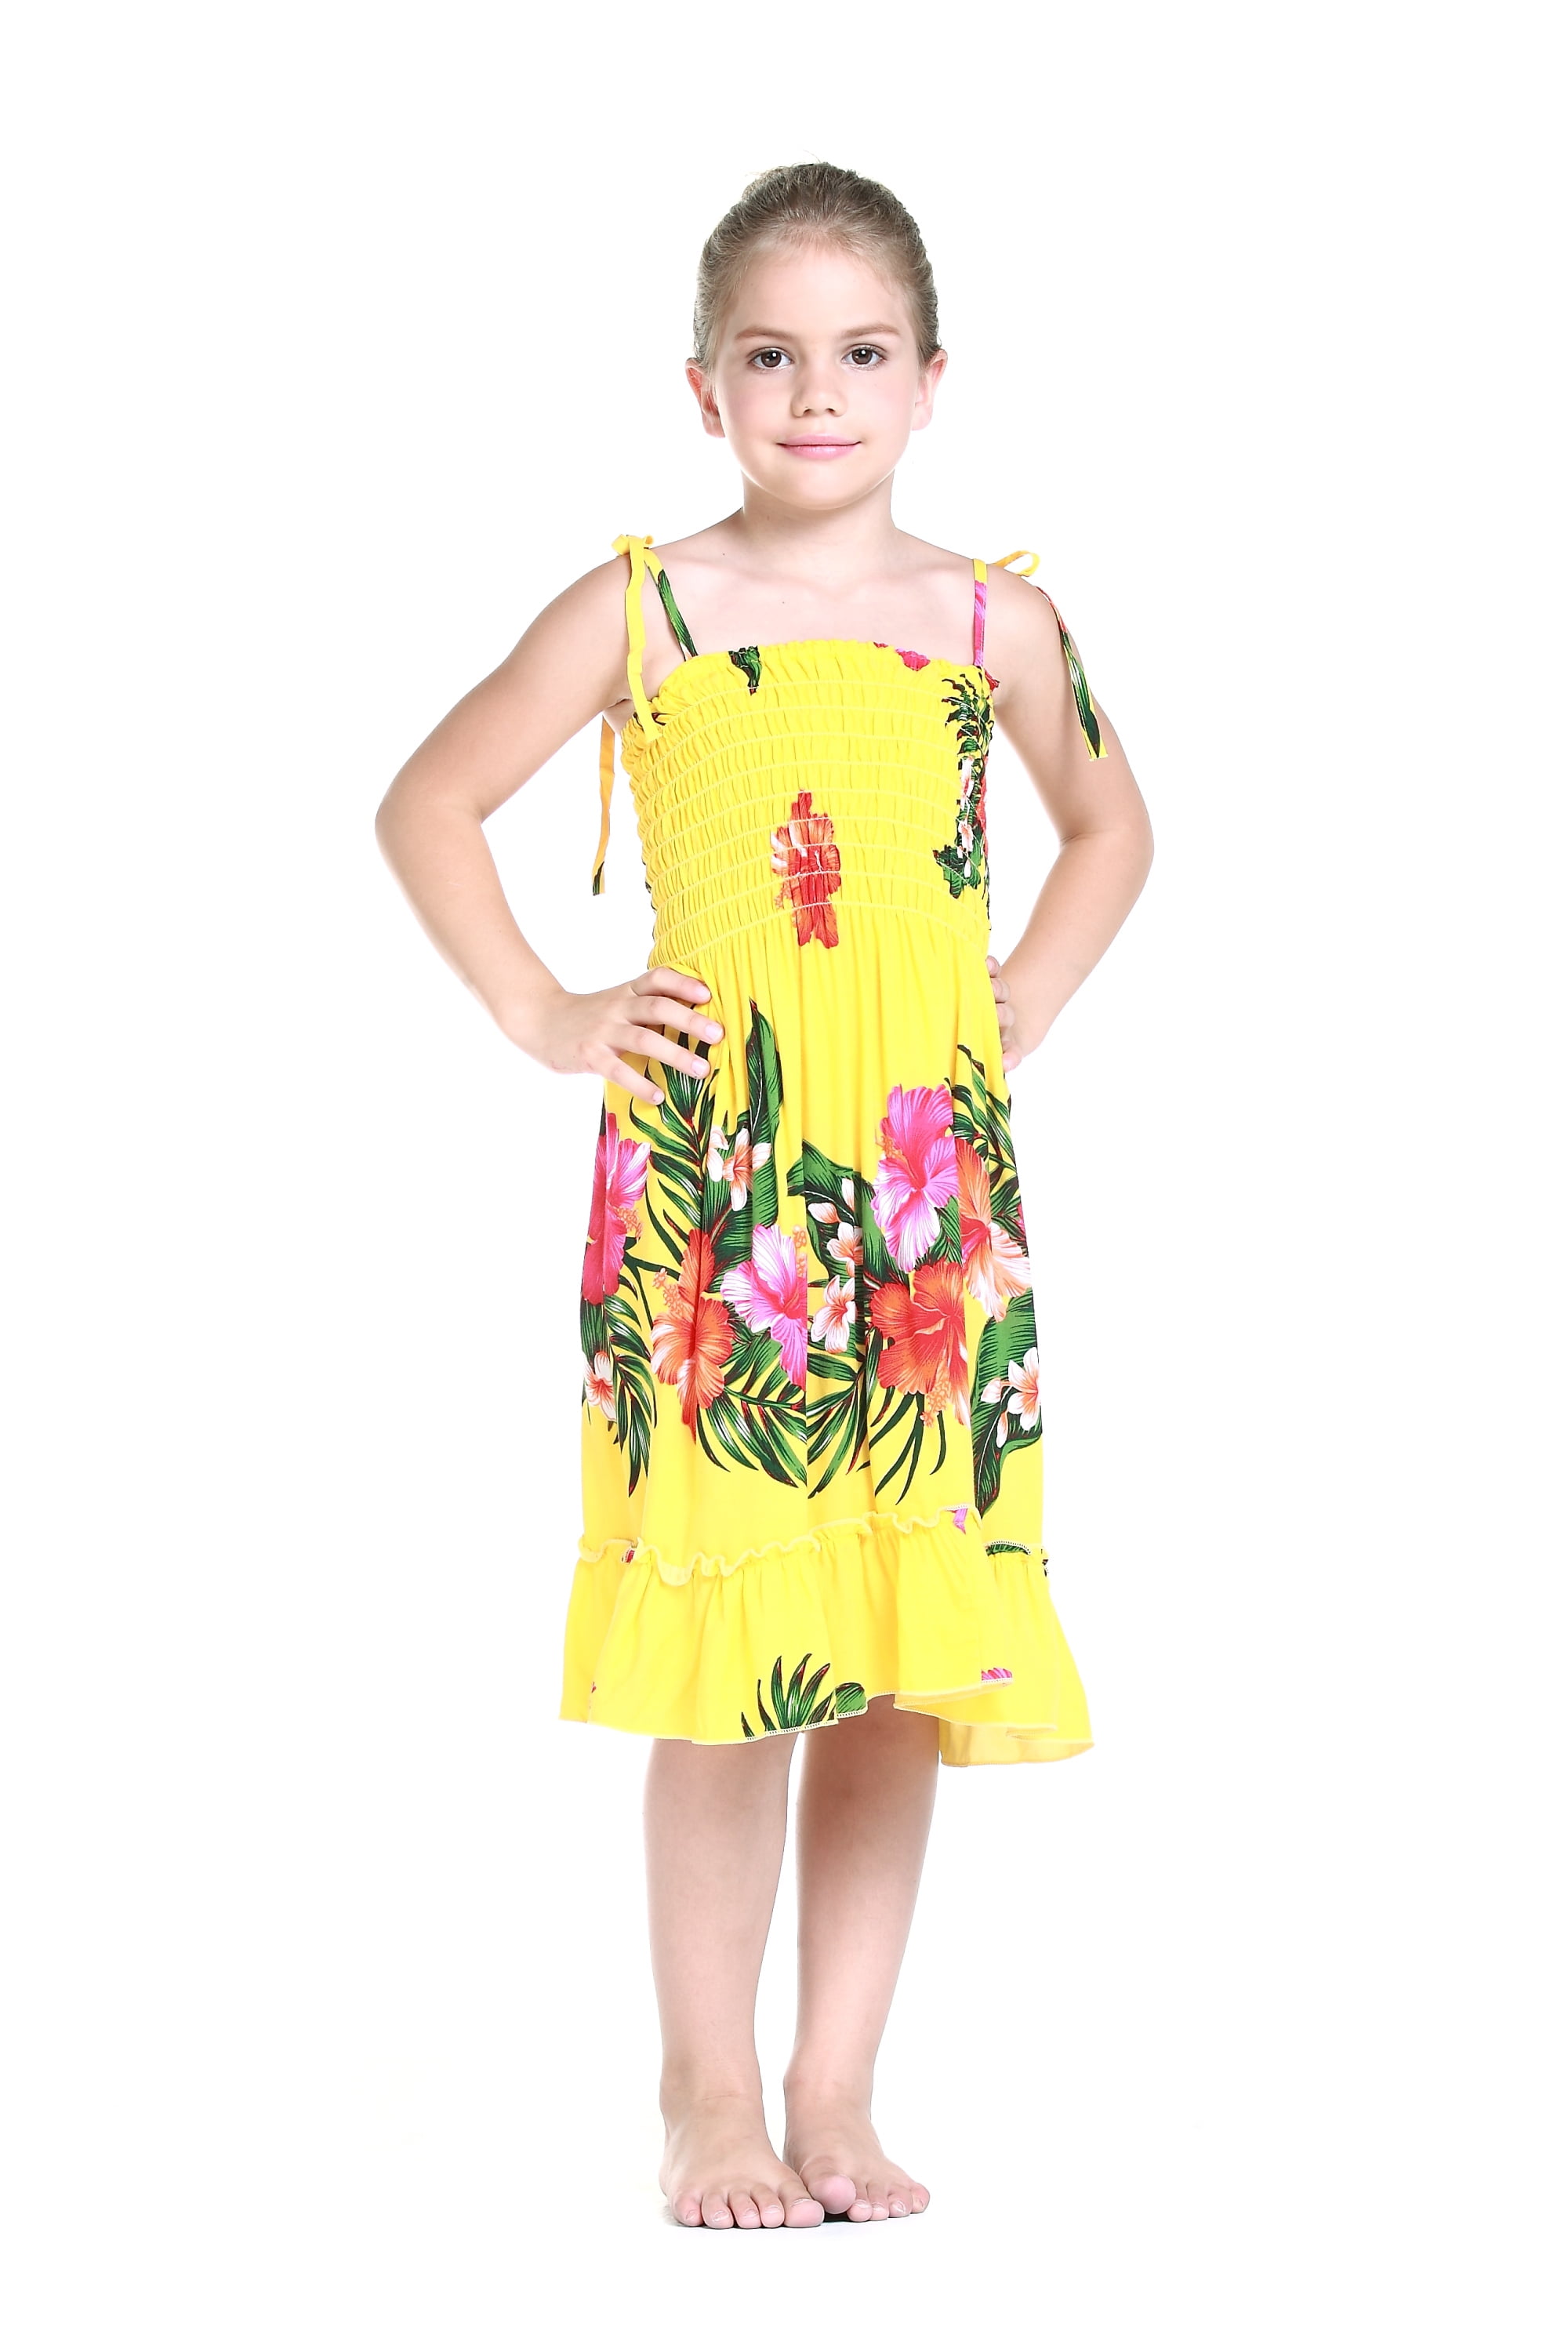 Hawaii Hangover Girl Elastic Top dress, up to size 12 - Walmart.com